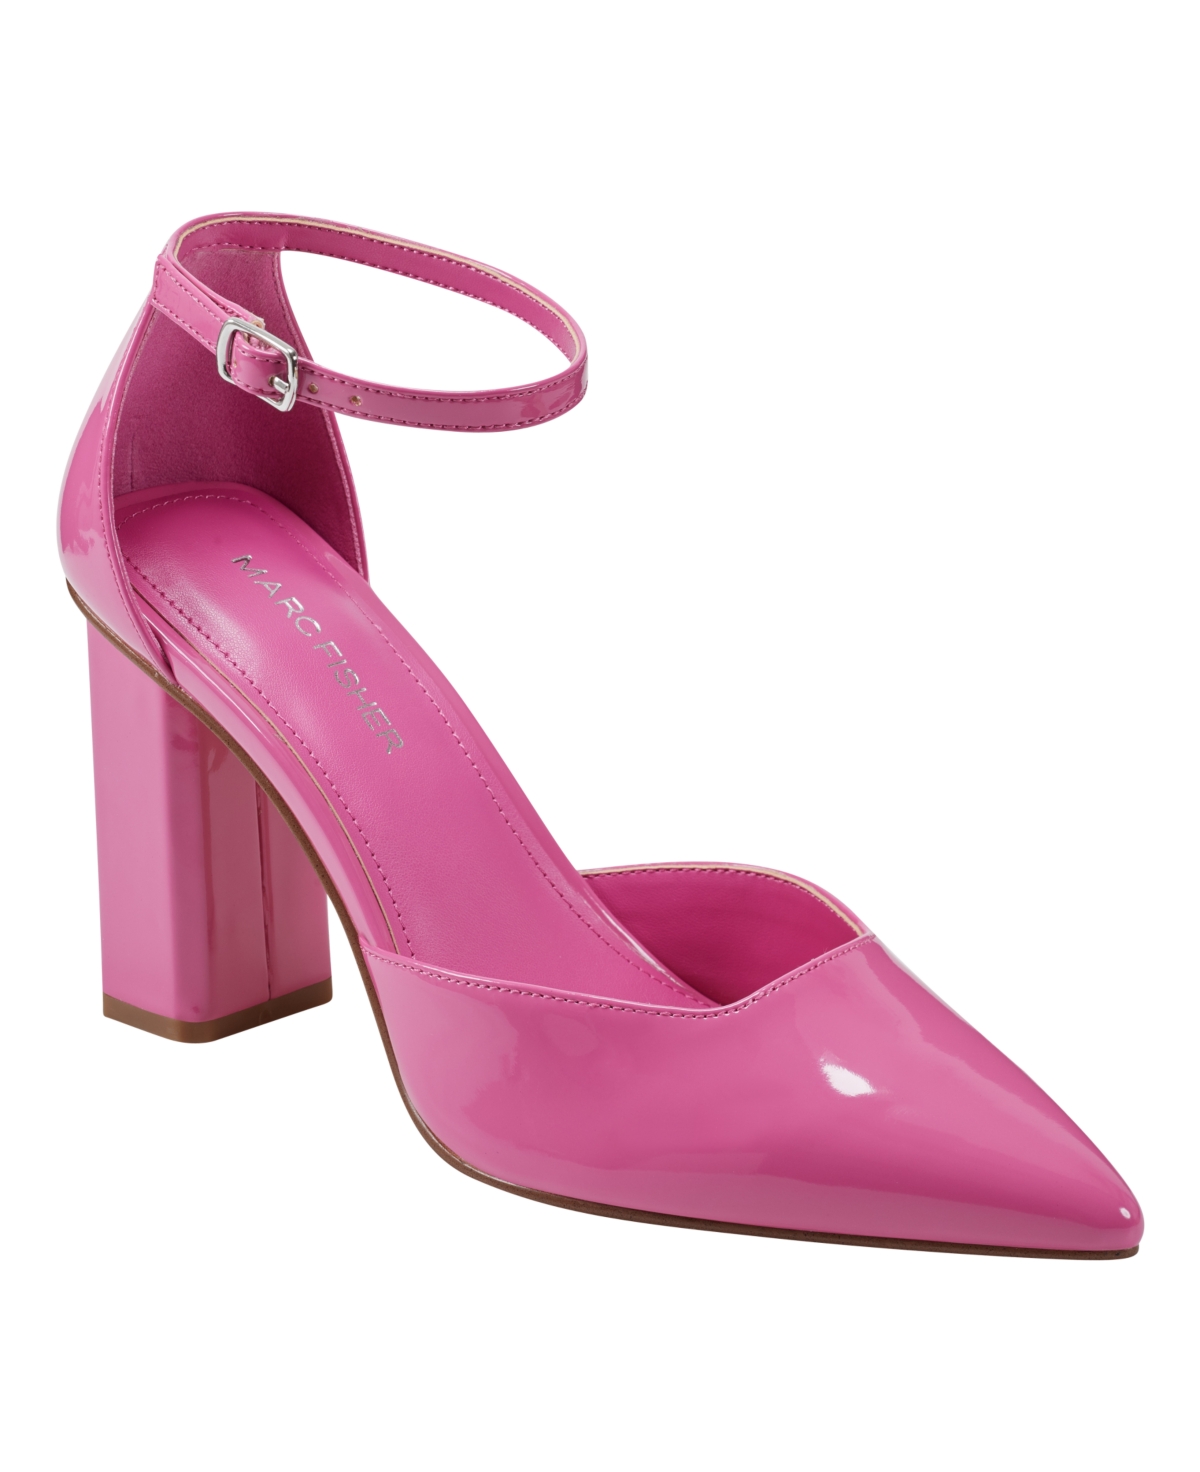 Women's Demeter Adjustable Ankle Strap Dress Pumps - Pink Patent - Faux Patent Leather